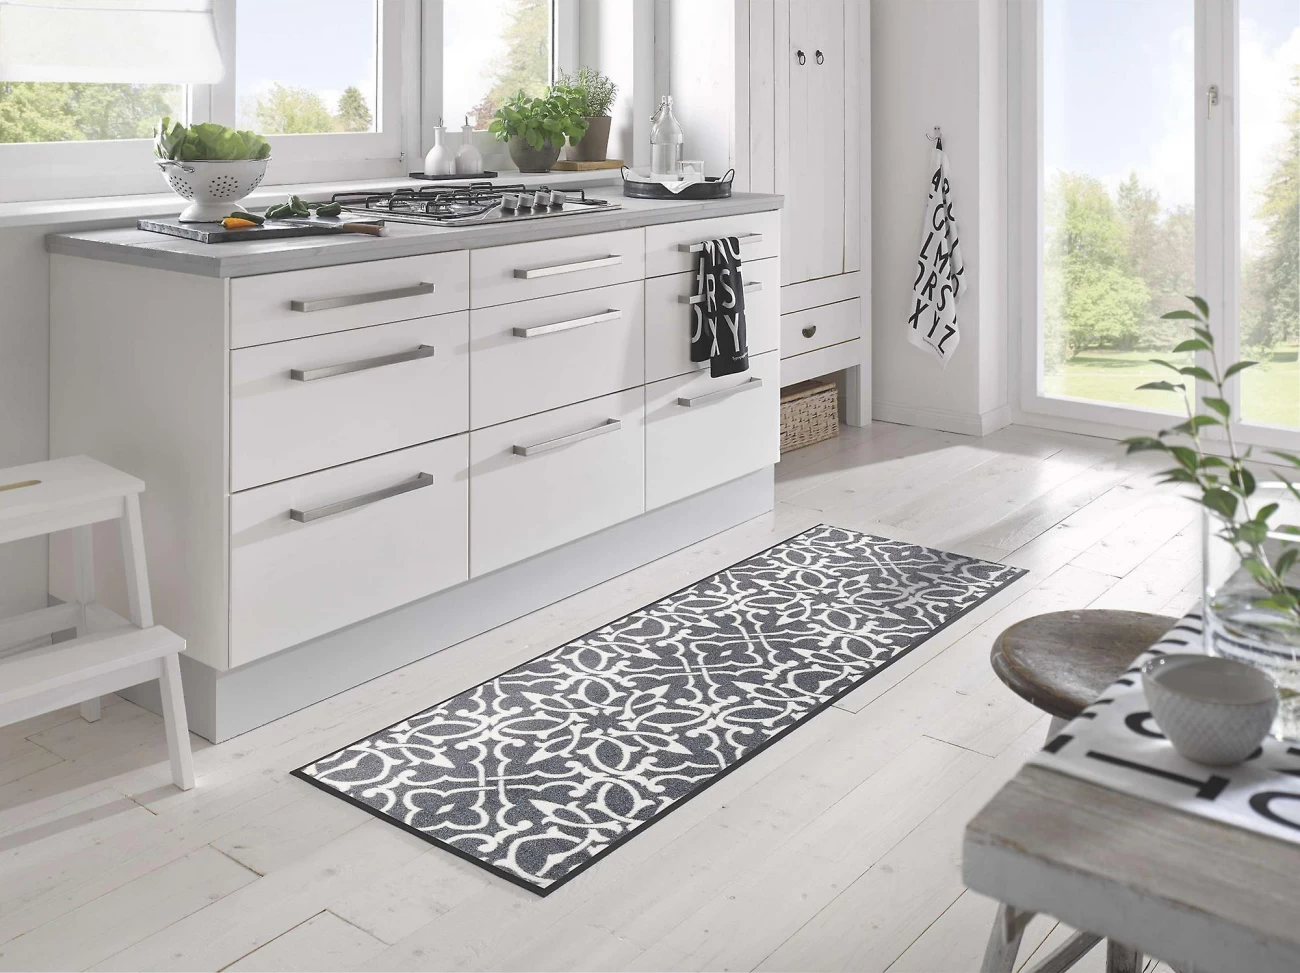 شستشو قالیچه آشپزخانه به کمک شامپو فرش